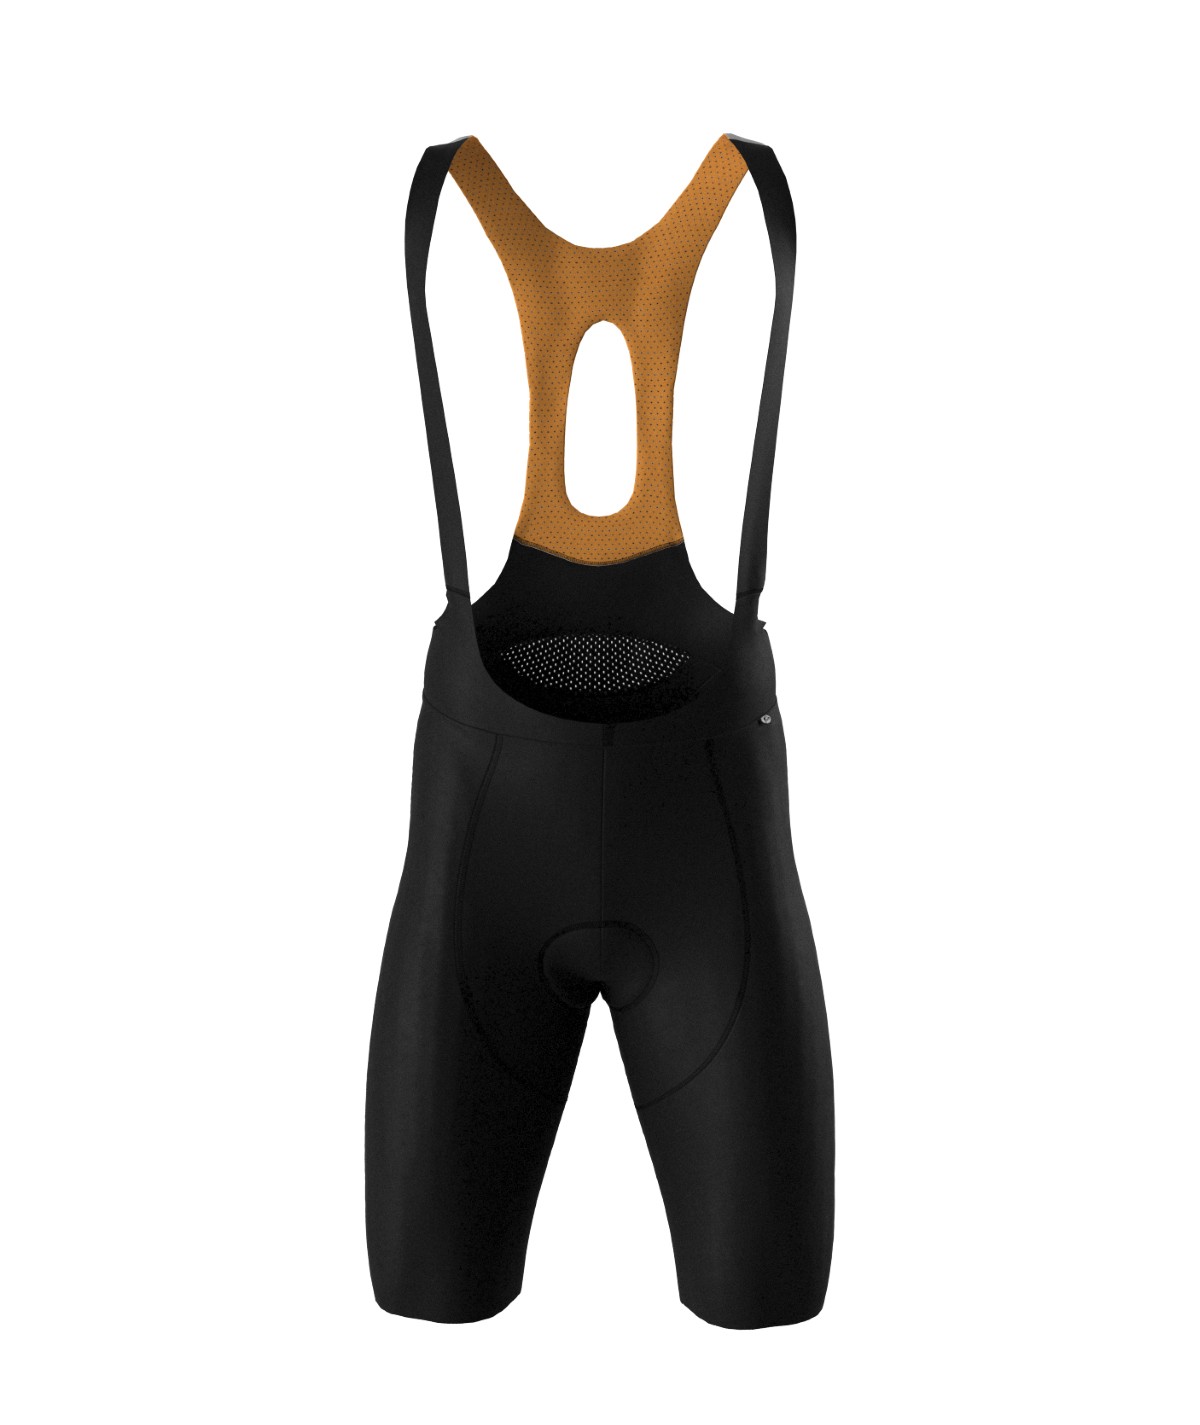 The Pro1 Silic 2.0 bib shorts from Rosti France